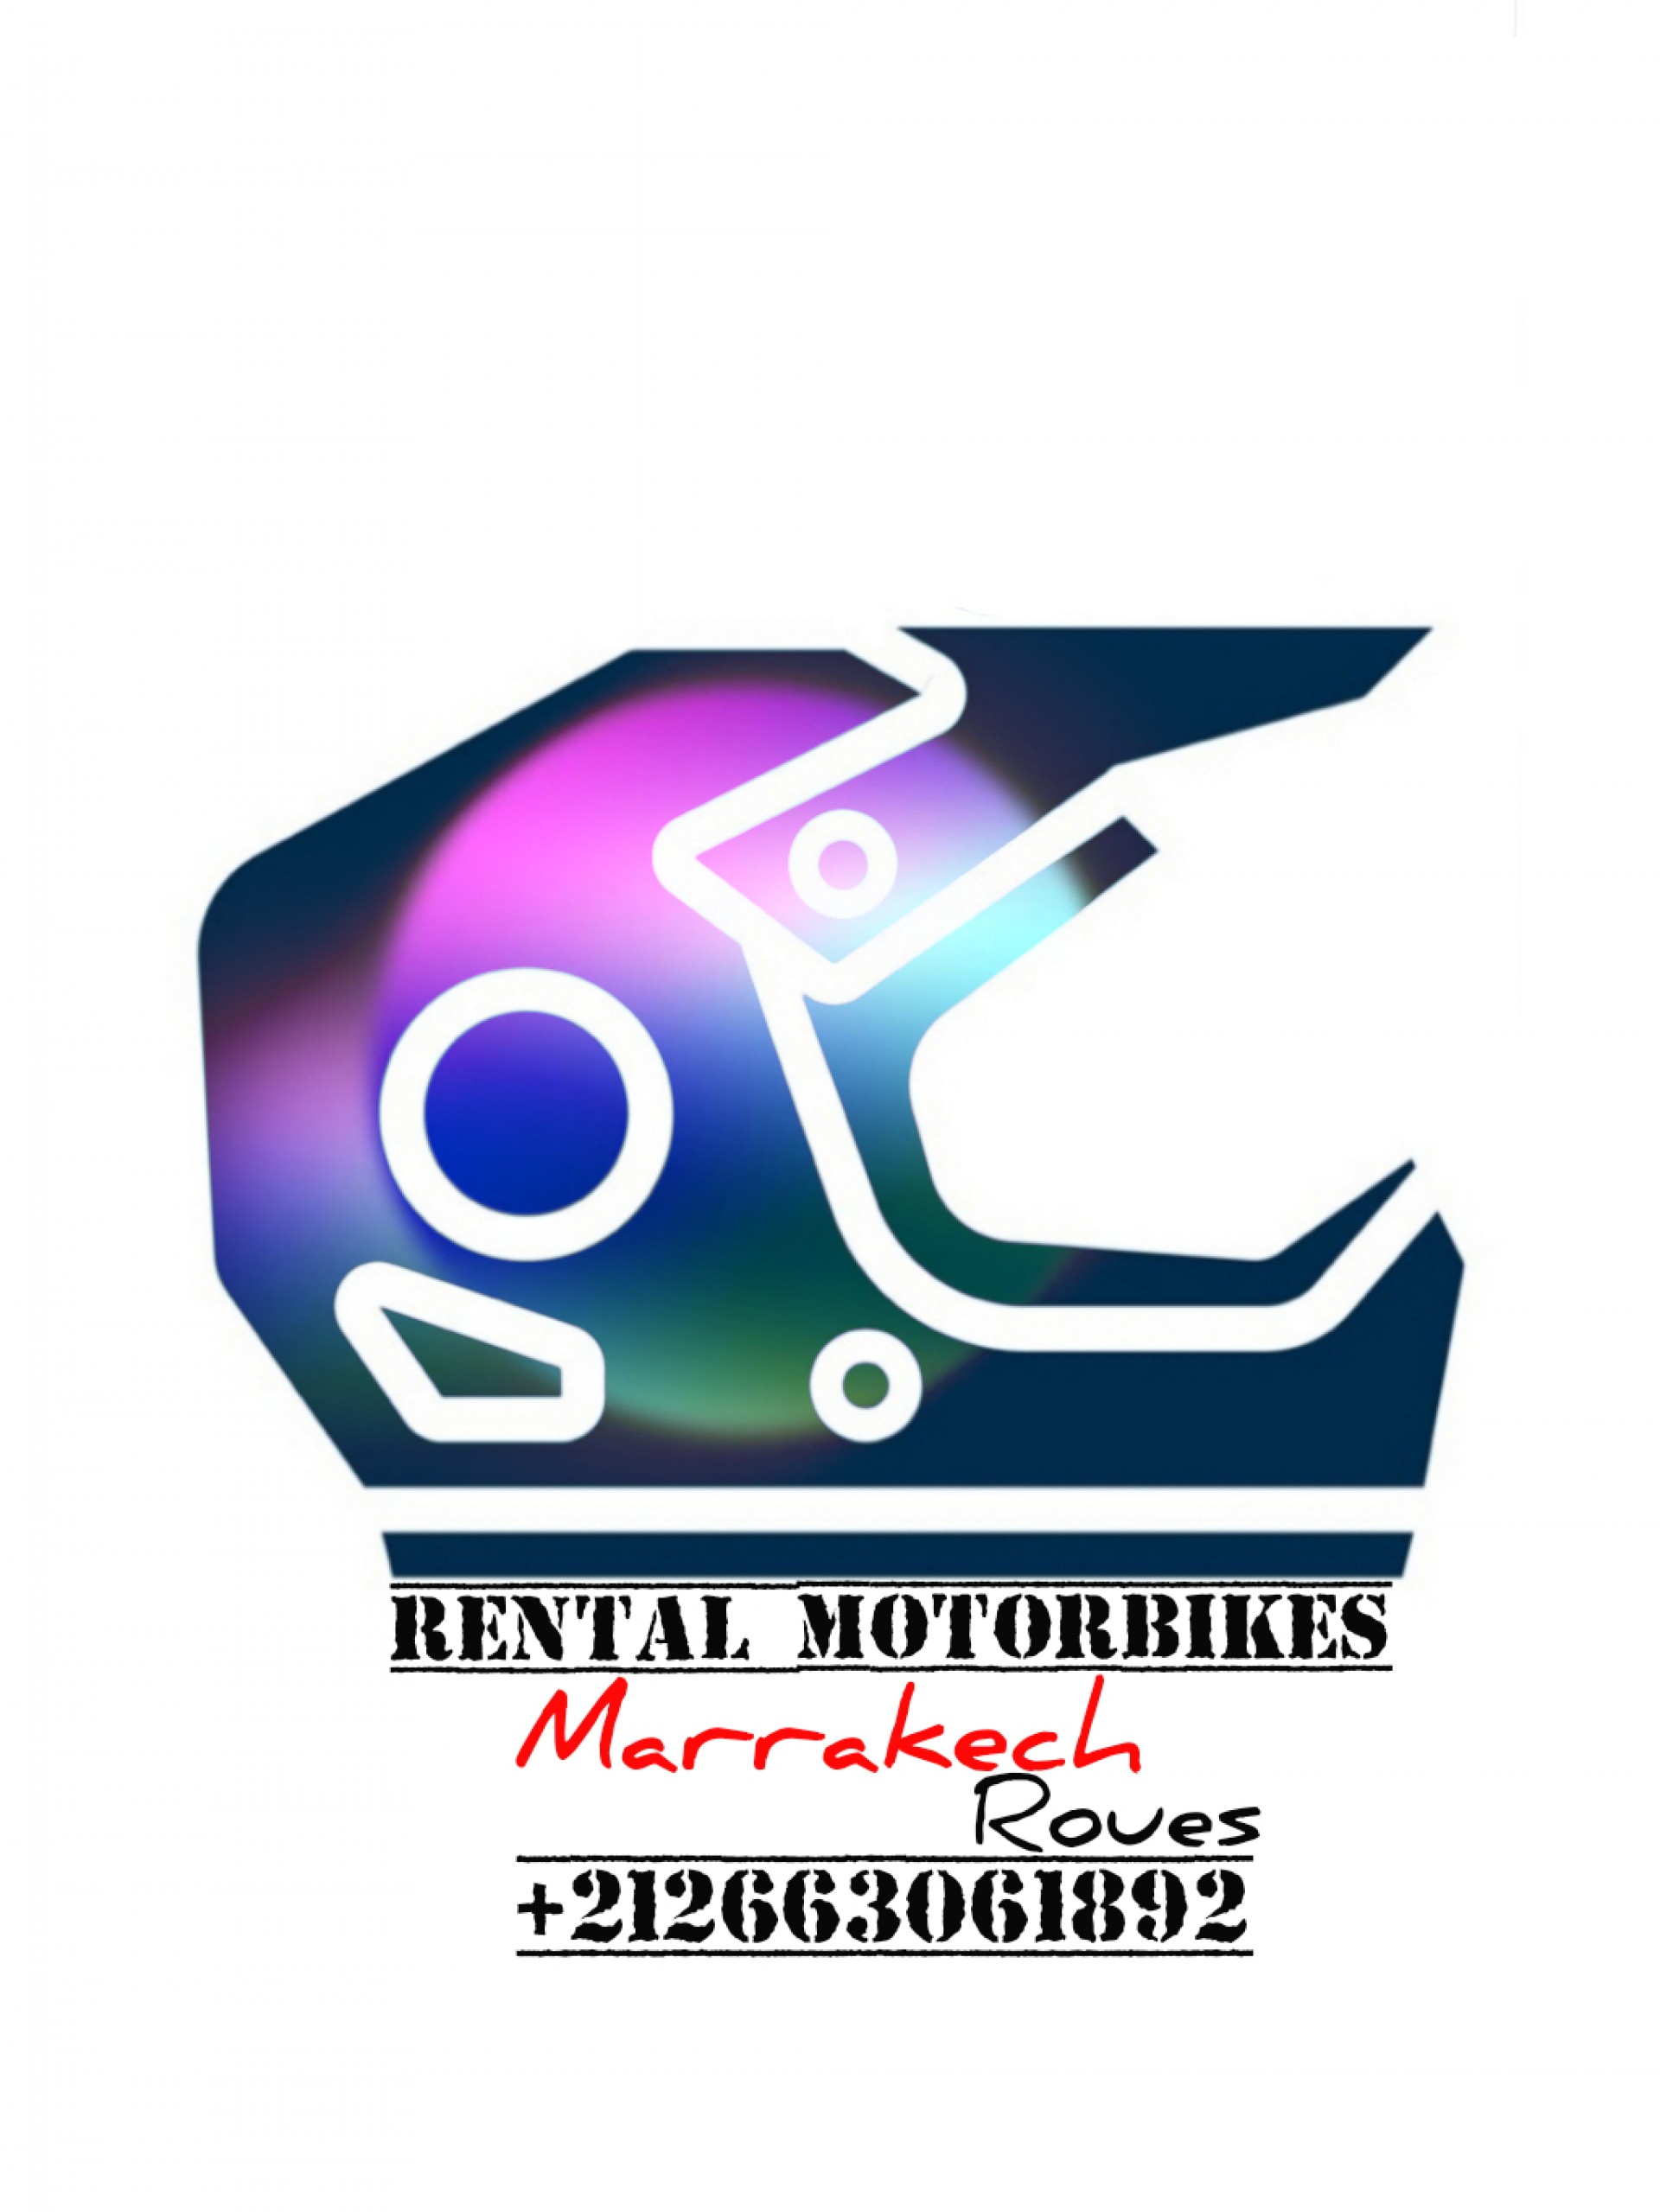 MARRAKECH ROUES RENTAL MOTOBIKE  logo